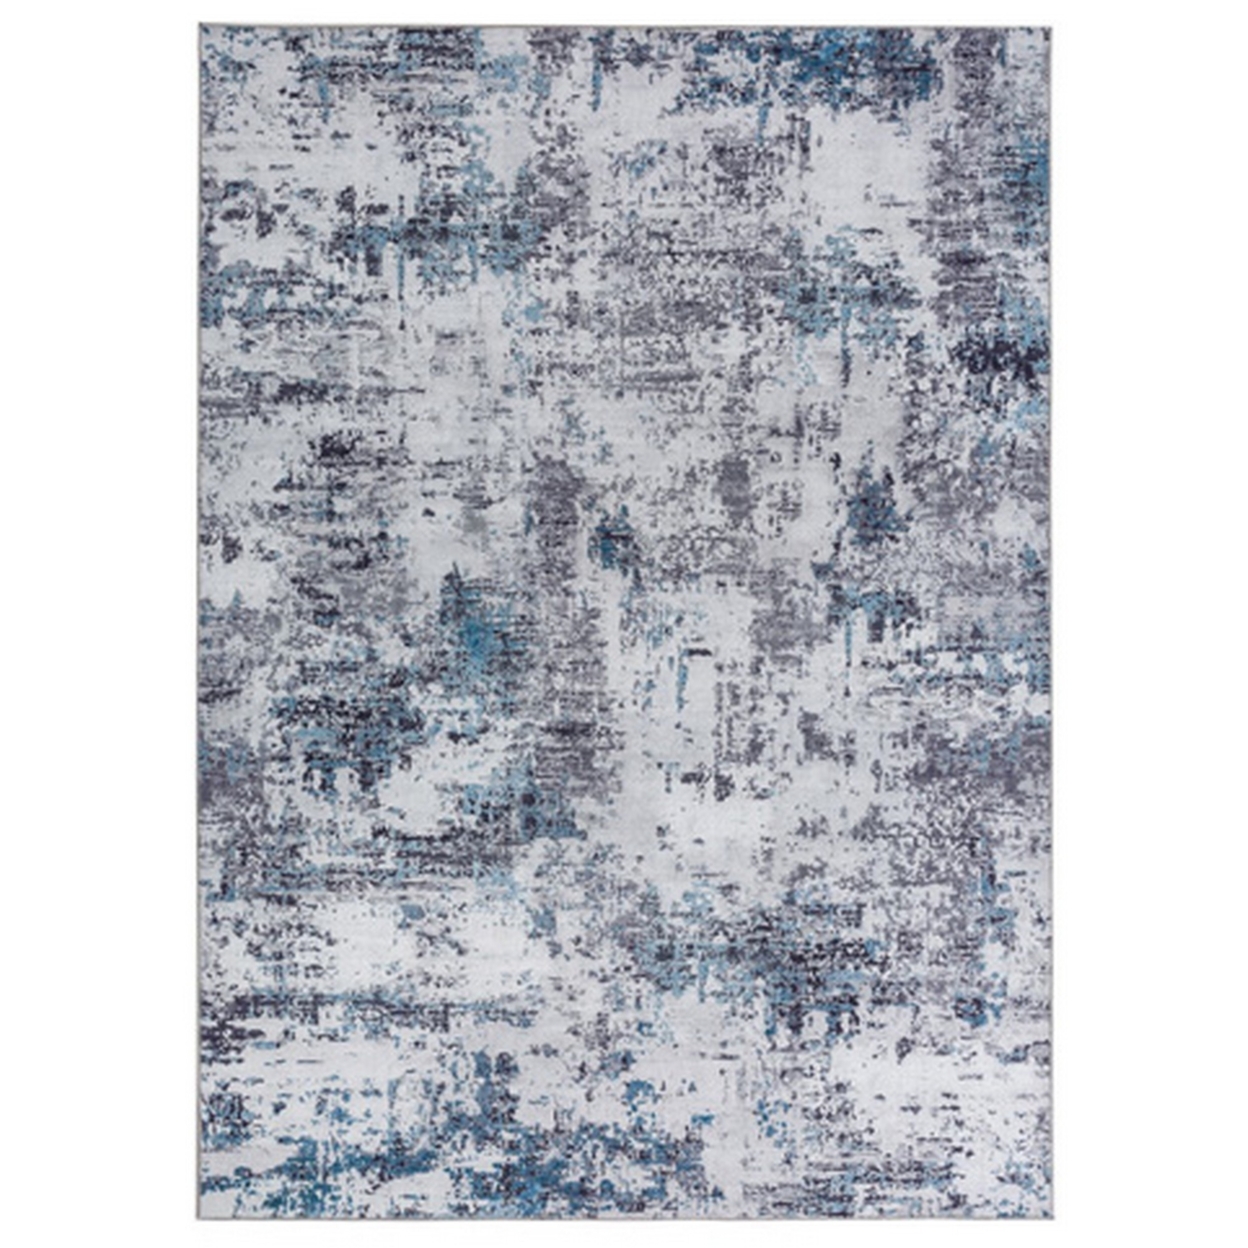 Keli 5 X 7 Modern Area Rug, Abstract Art Design, Soft Fabric, Gray, Blue- Saltoro Sherpi